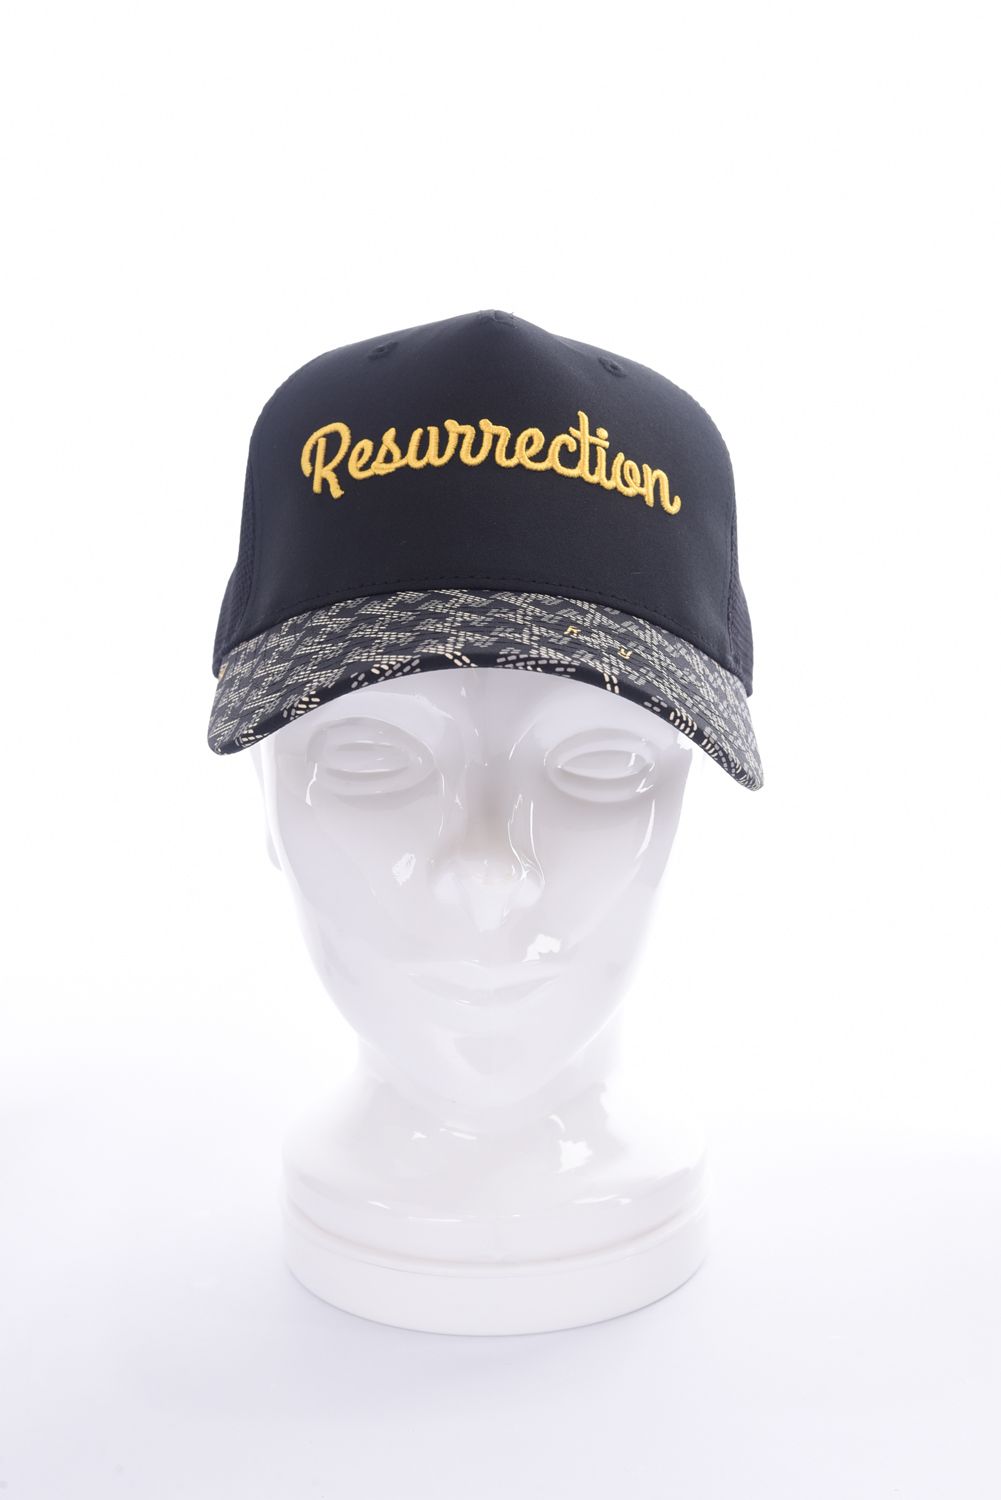 Resurrection - GM BLIM MESH CAP UV / ブランドオリジナル 